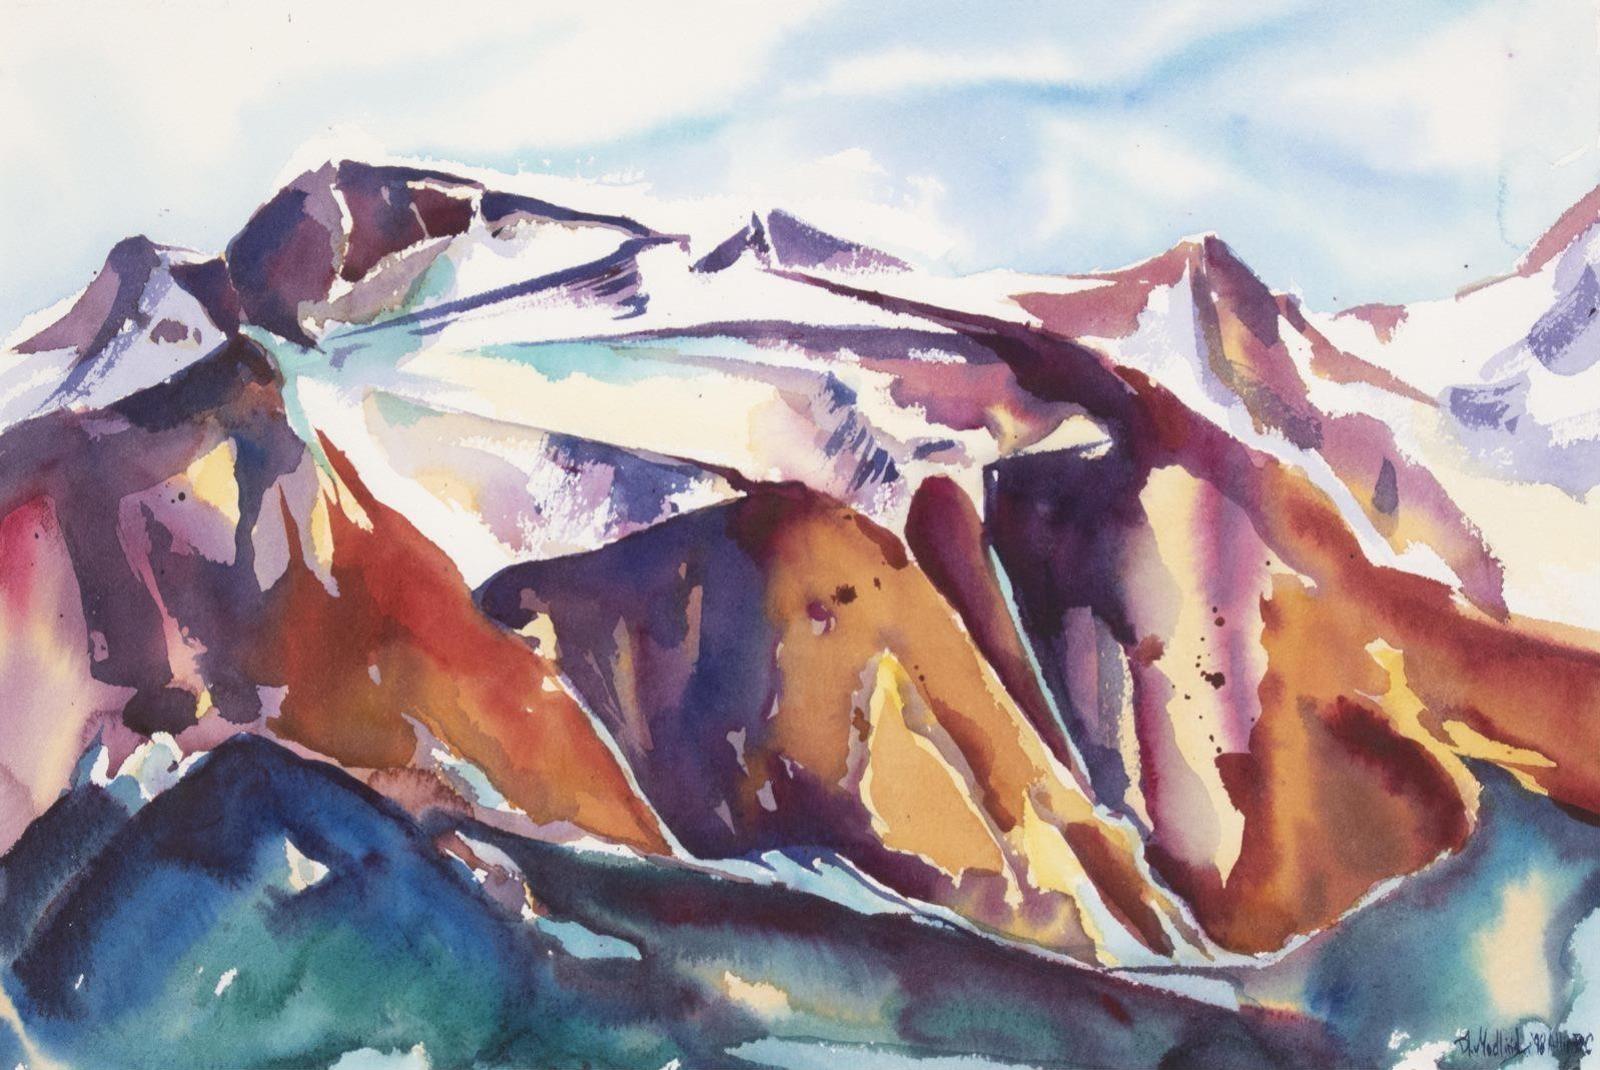 Dominik J. Modlinski (1970) - Mountain Peaks